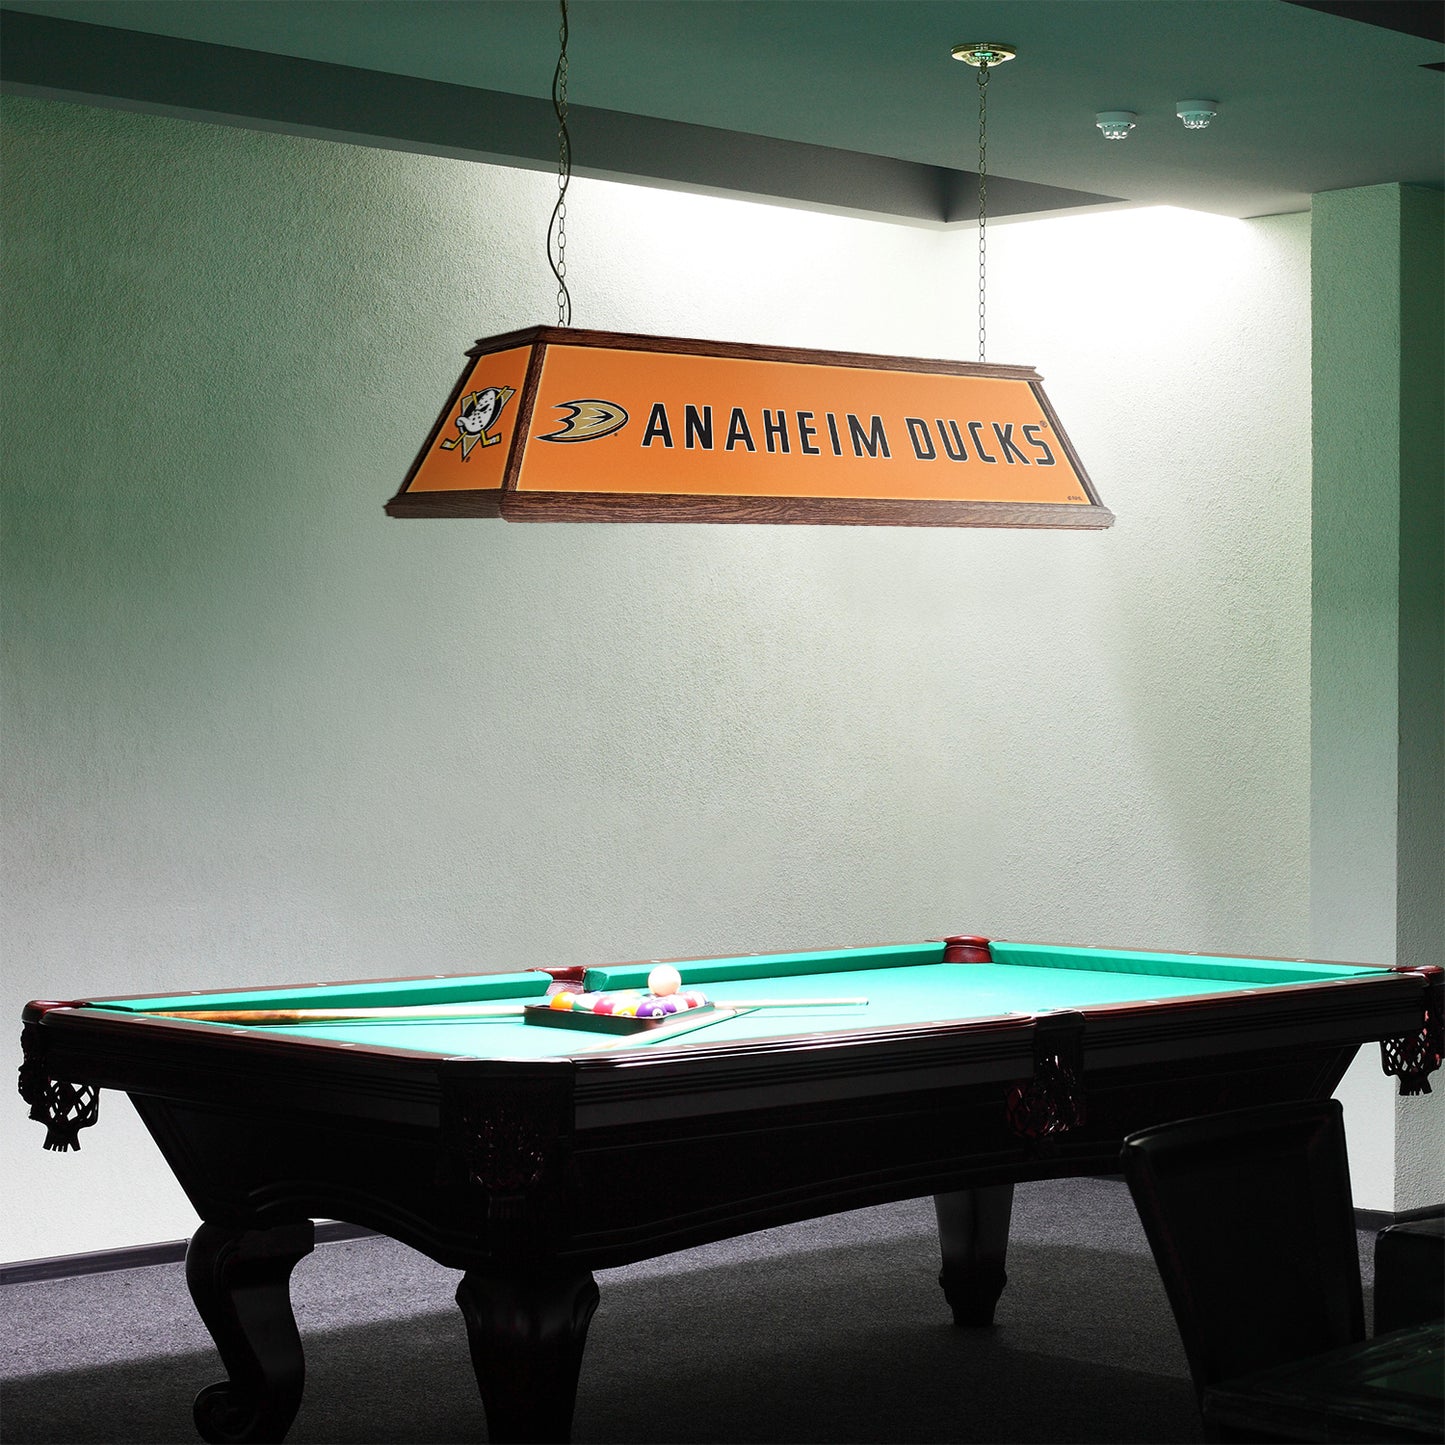 Anaheim Ducks Premium Pool Table Light Room View